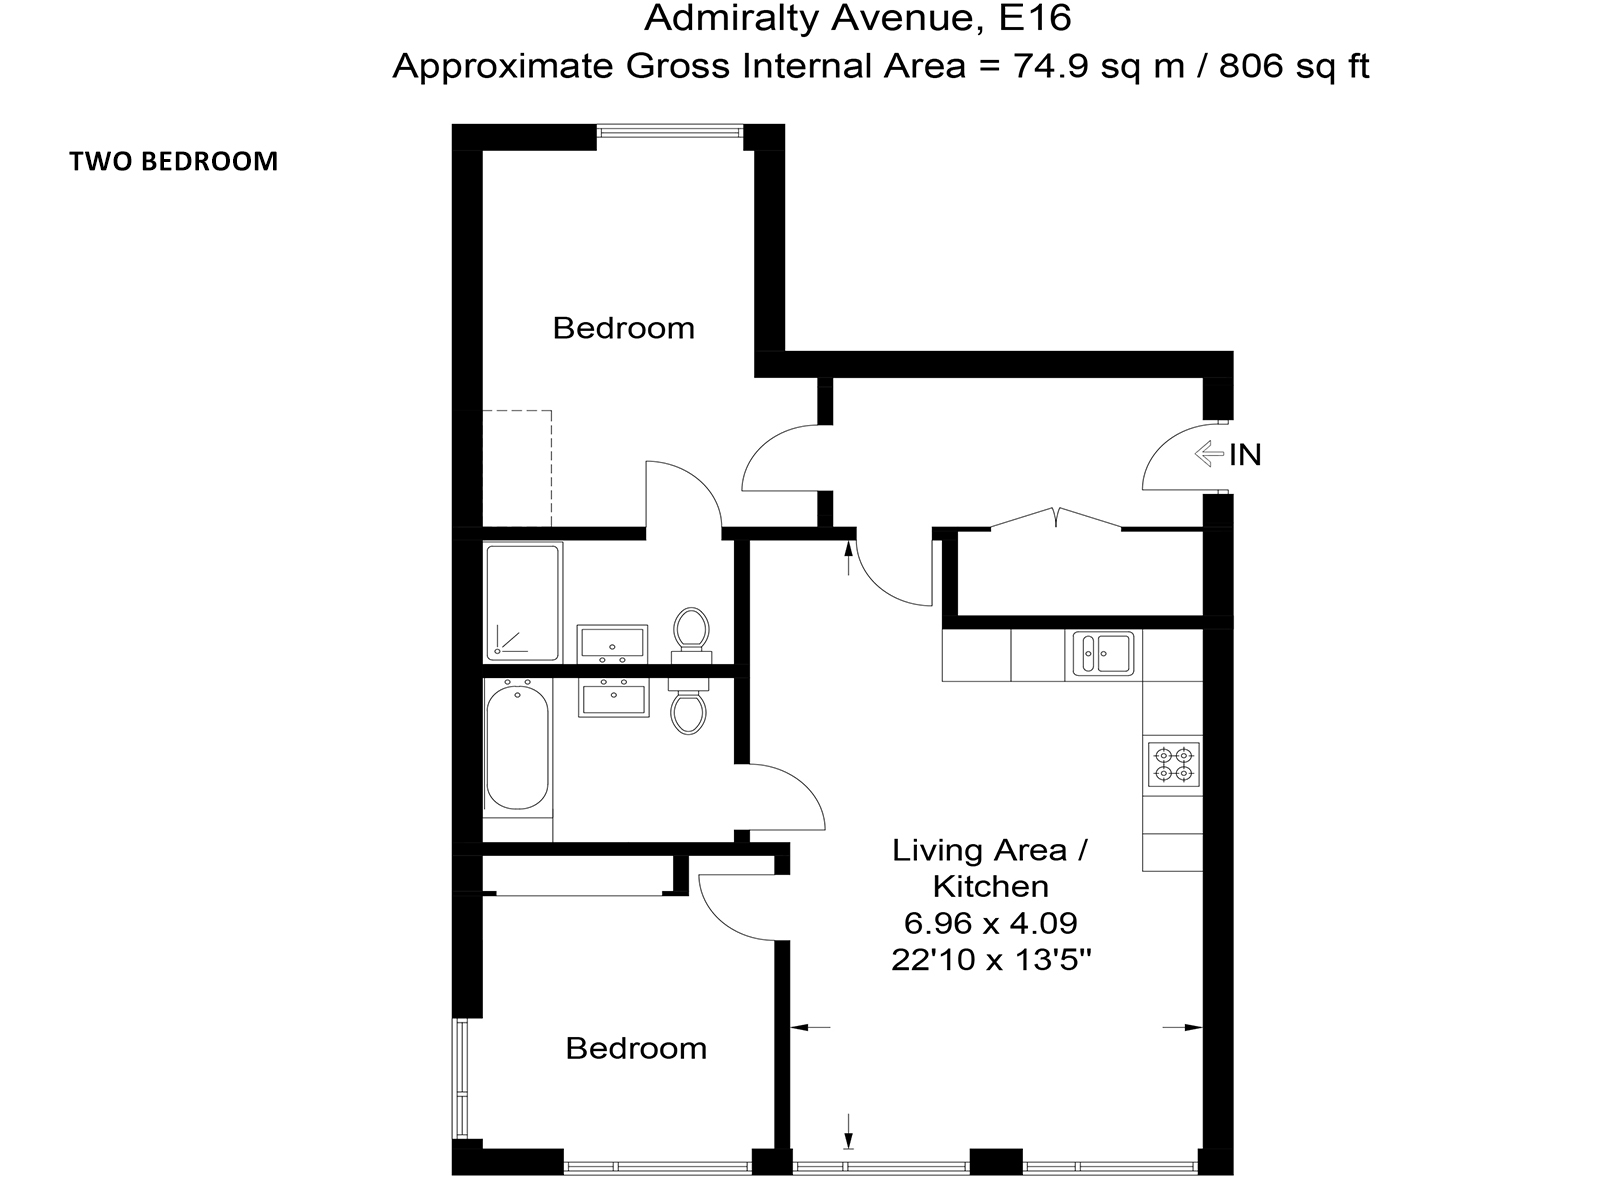 Royal Wharf two bedroom apartment floor plan